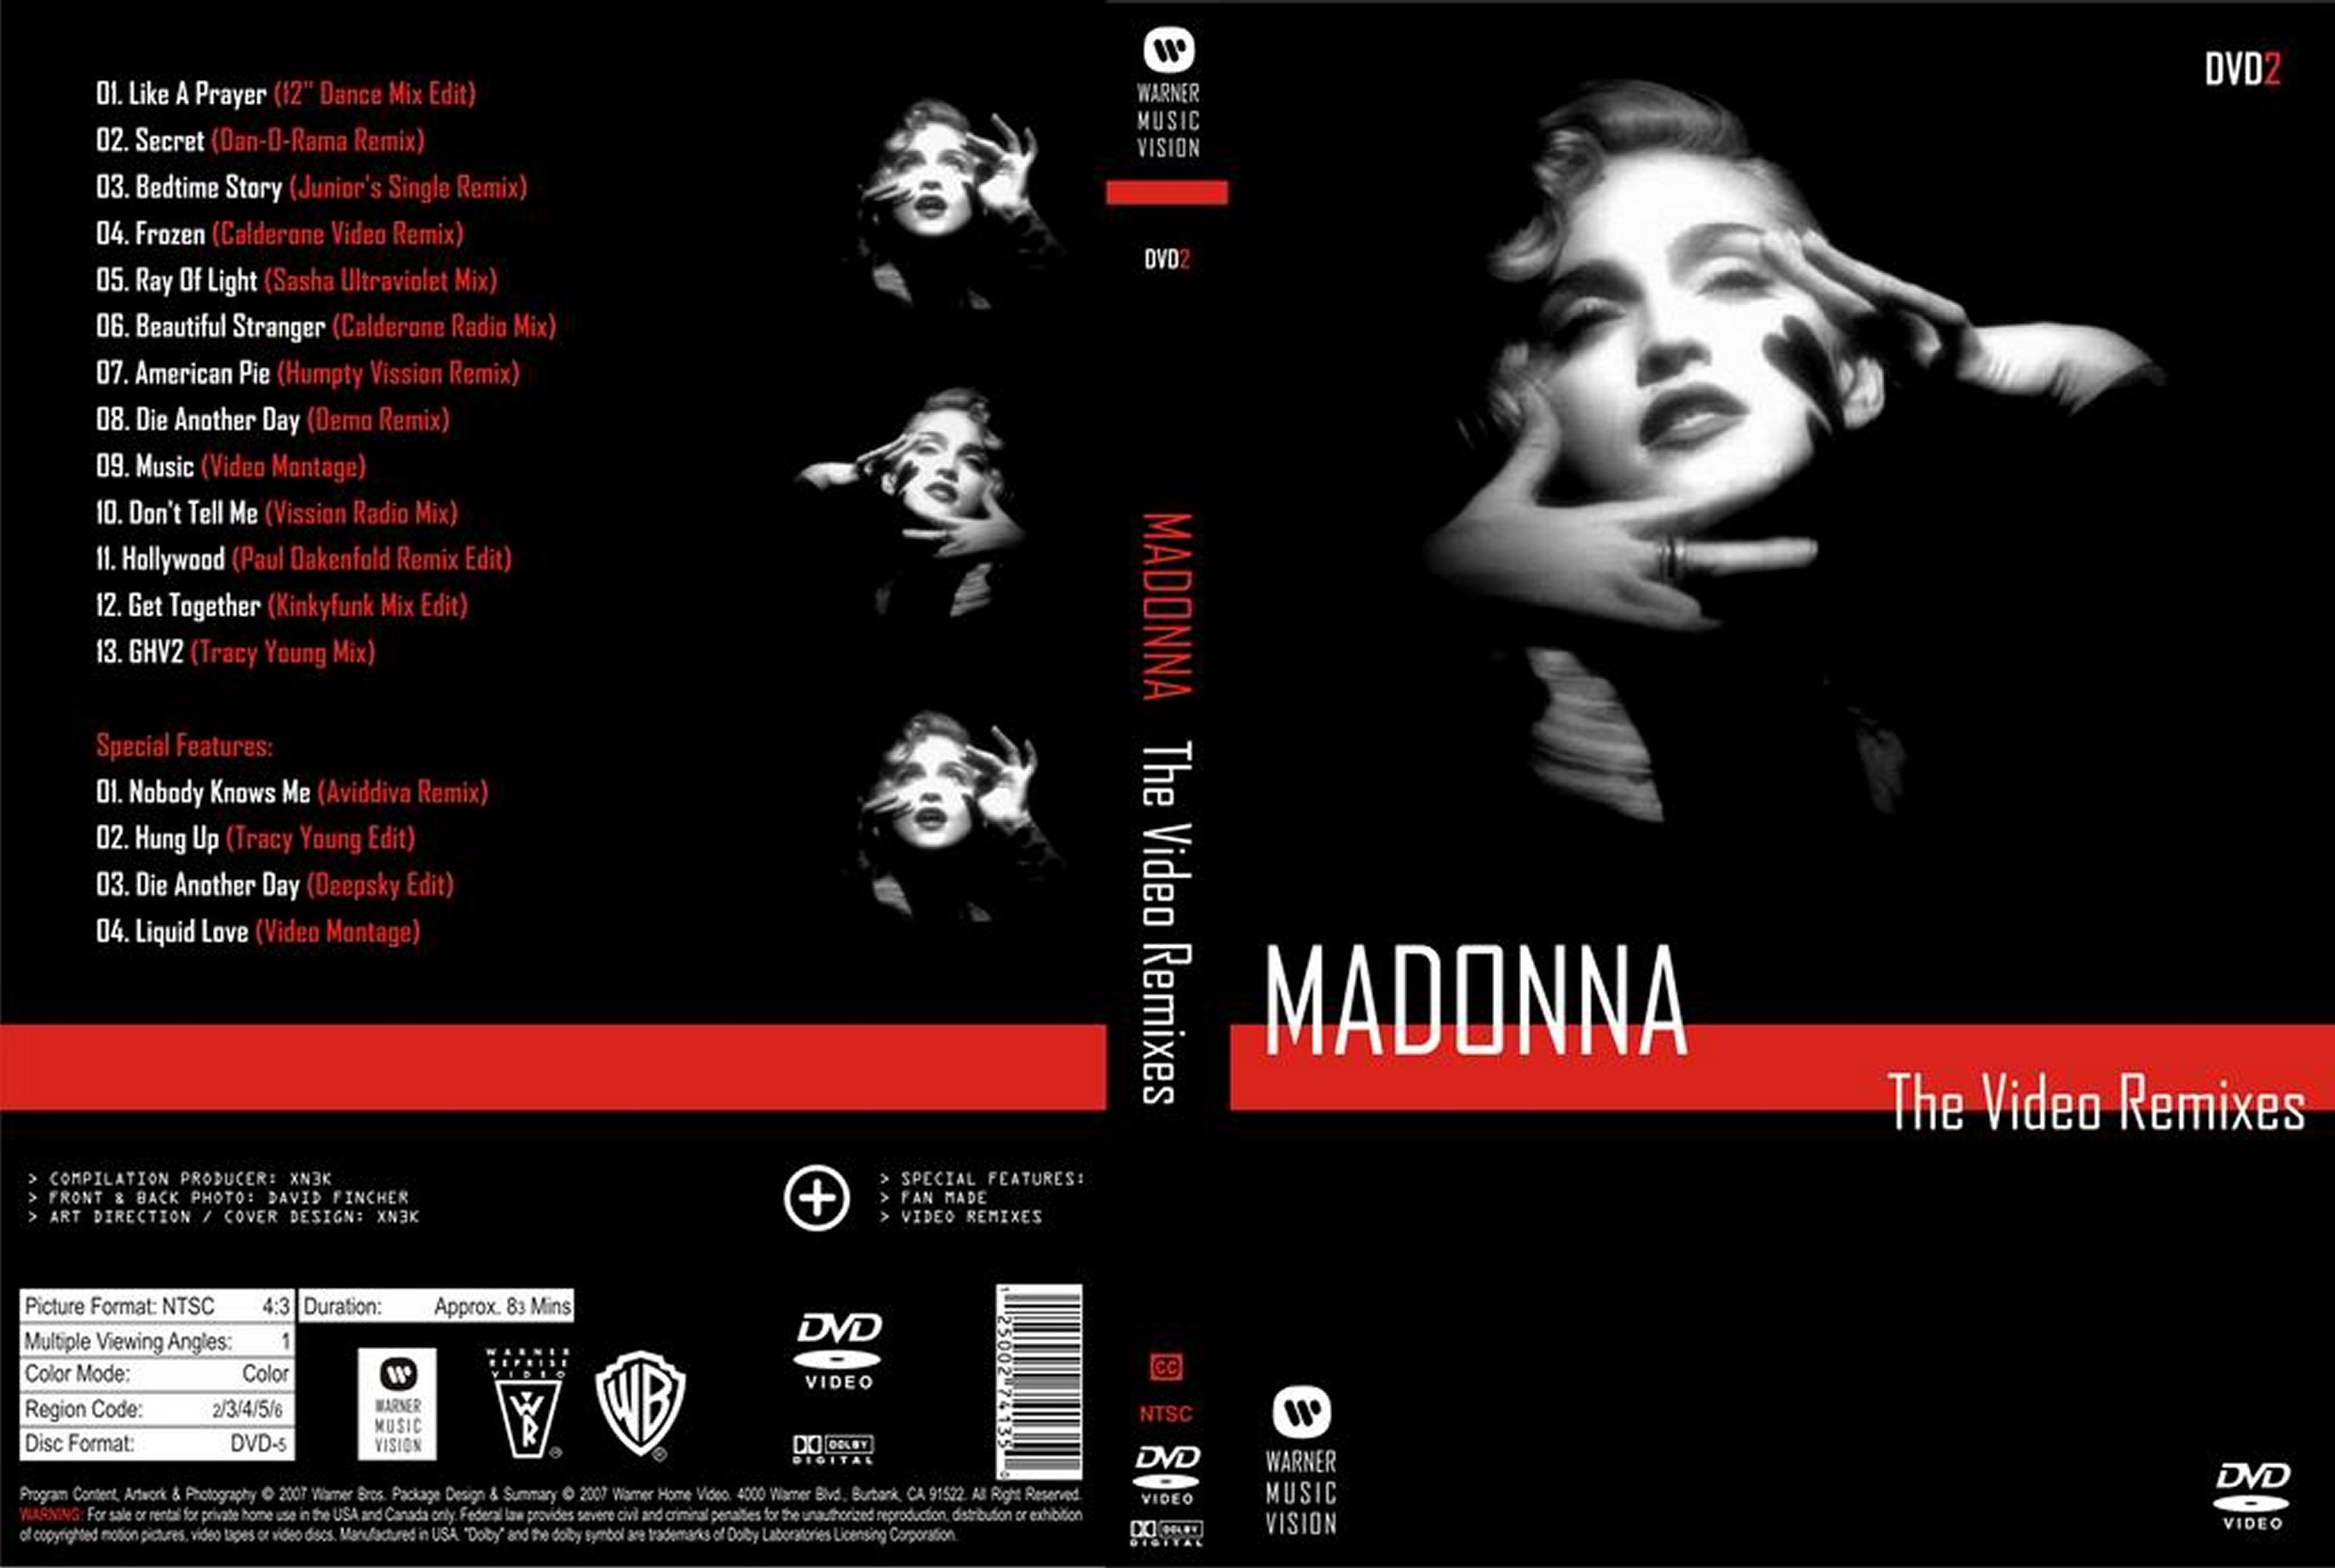 Jaquette DVD Madonna - The Video Remixes DVD 2